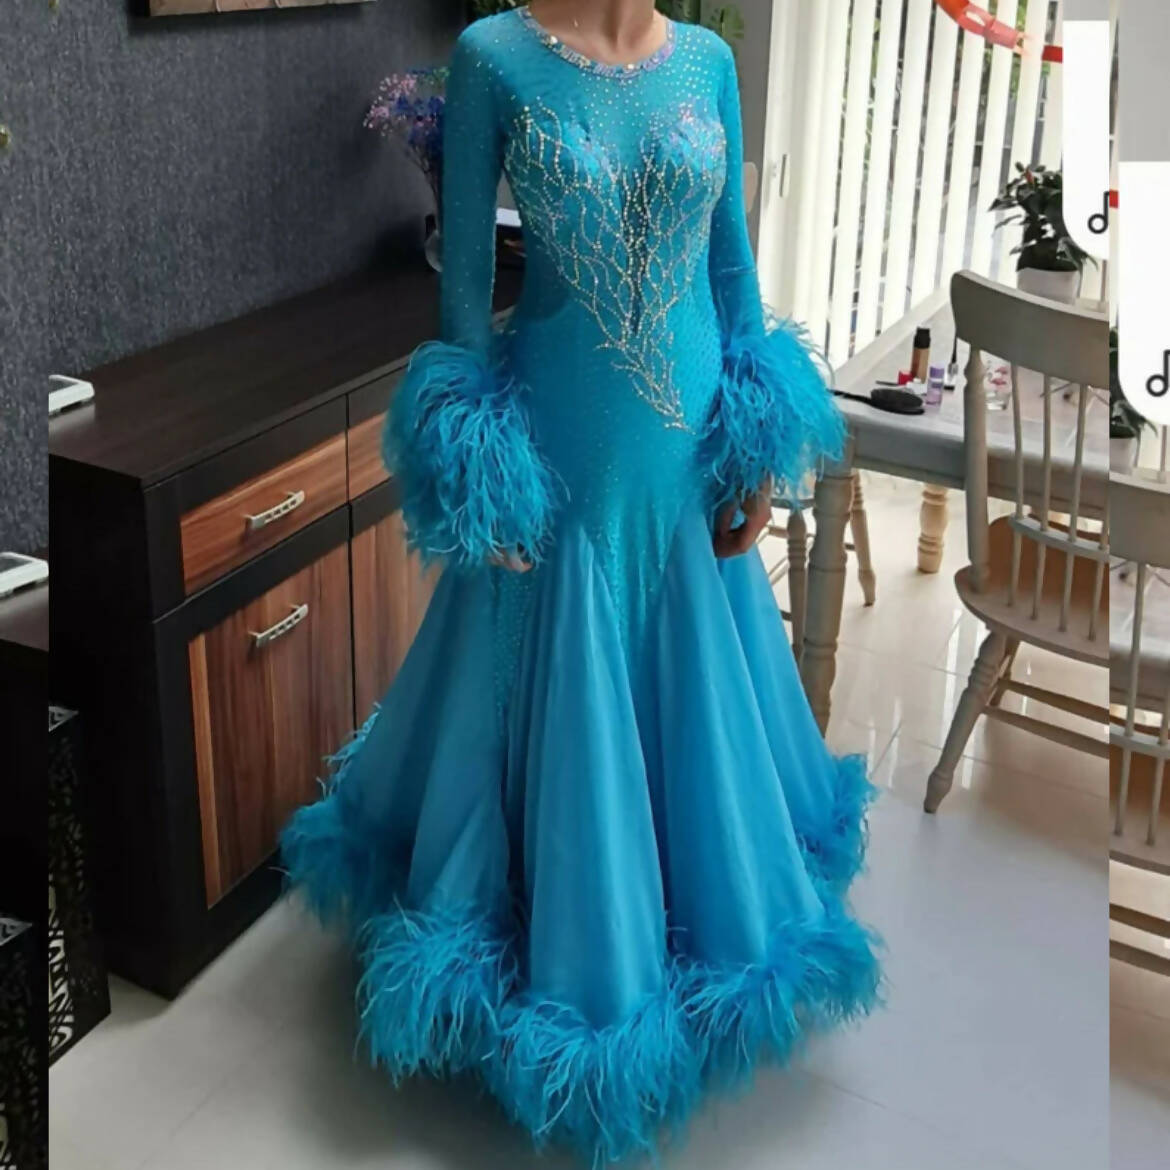 Blue Sparkling Crystal Heart Design Dress for Standard, Smooth, Ballroom